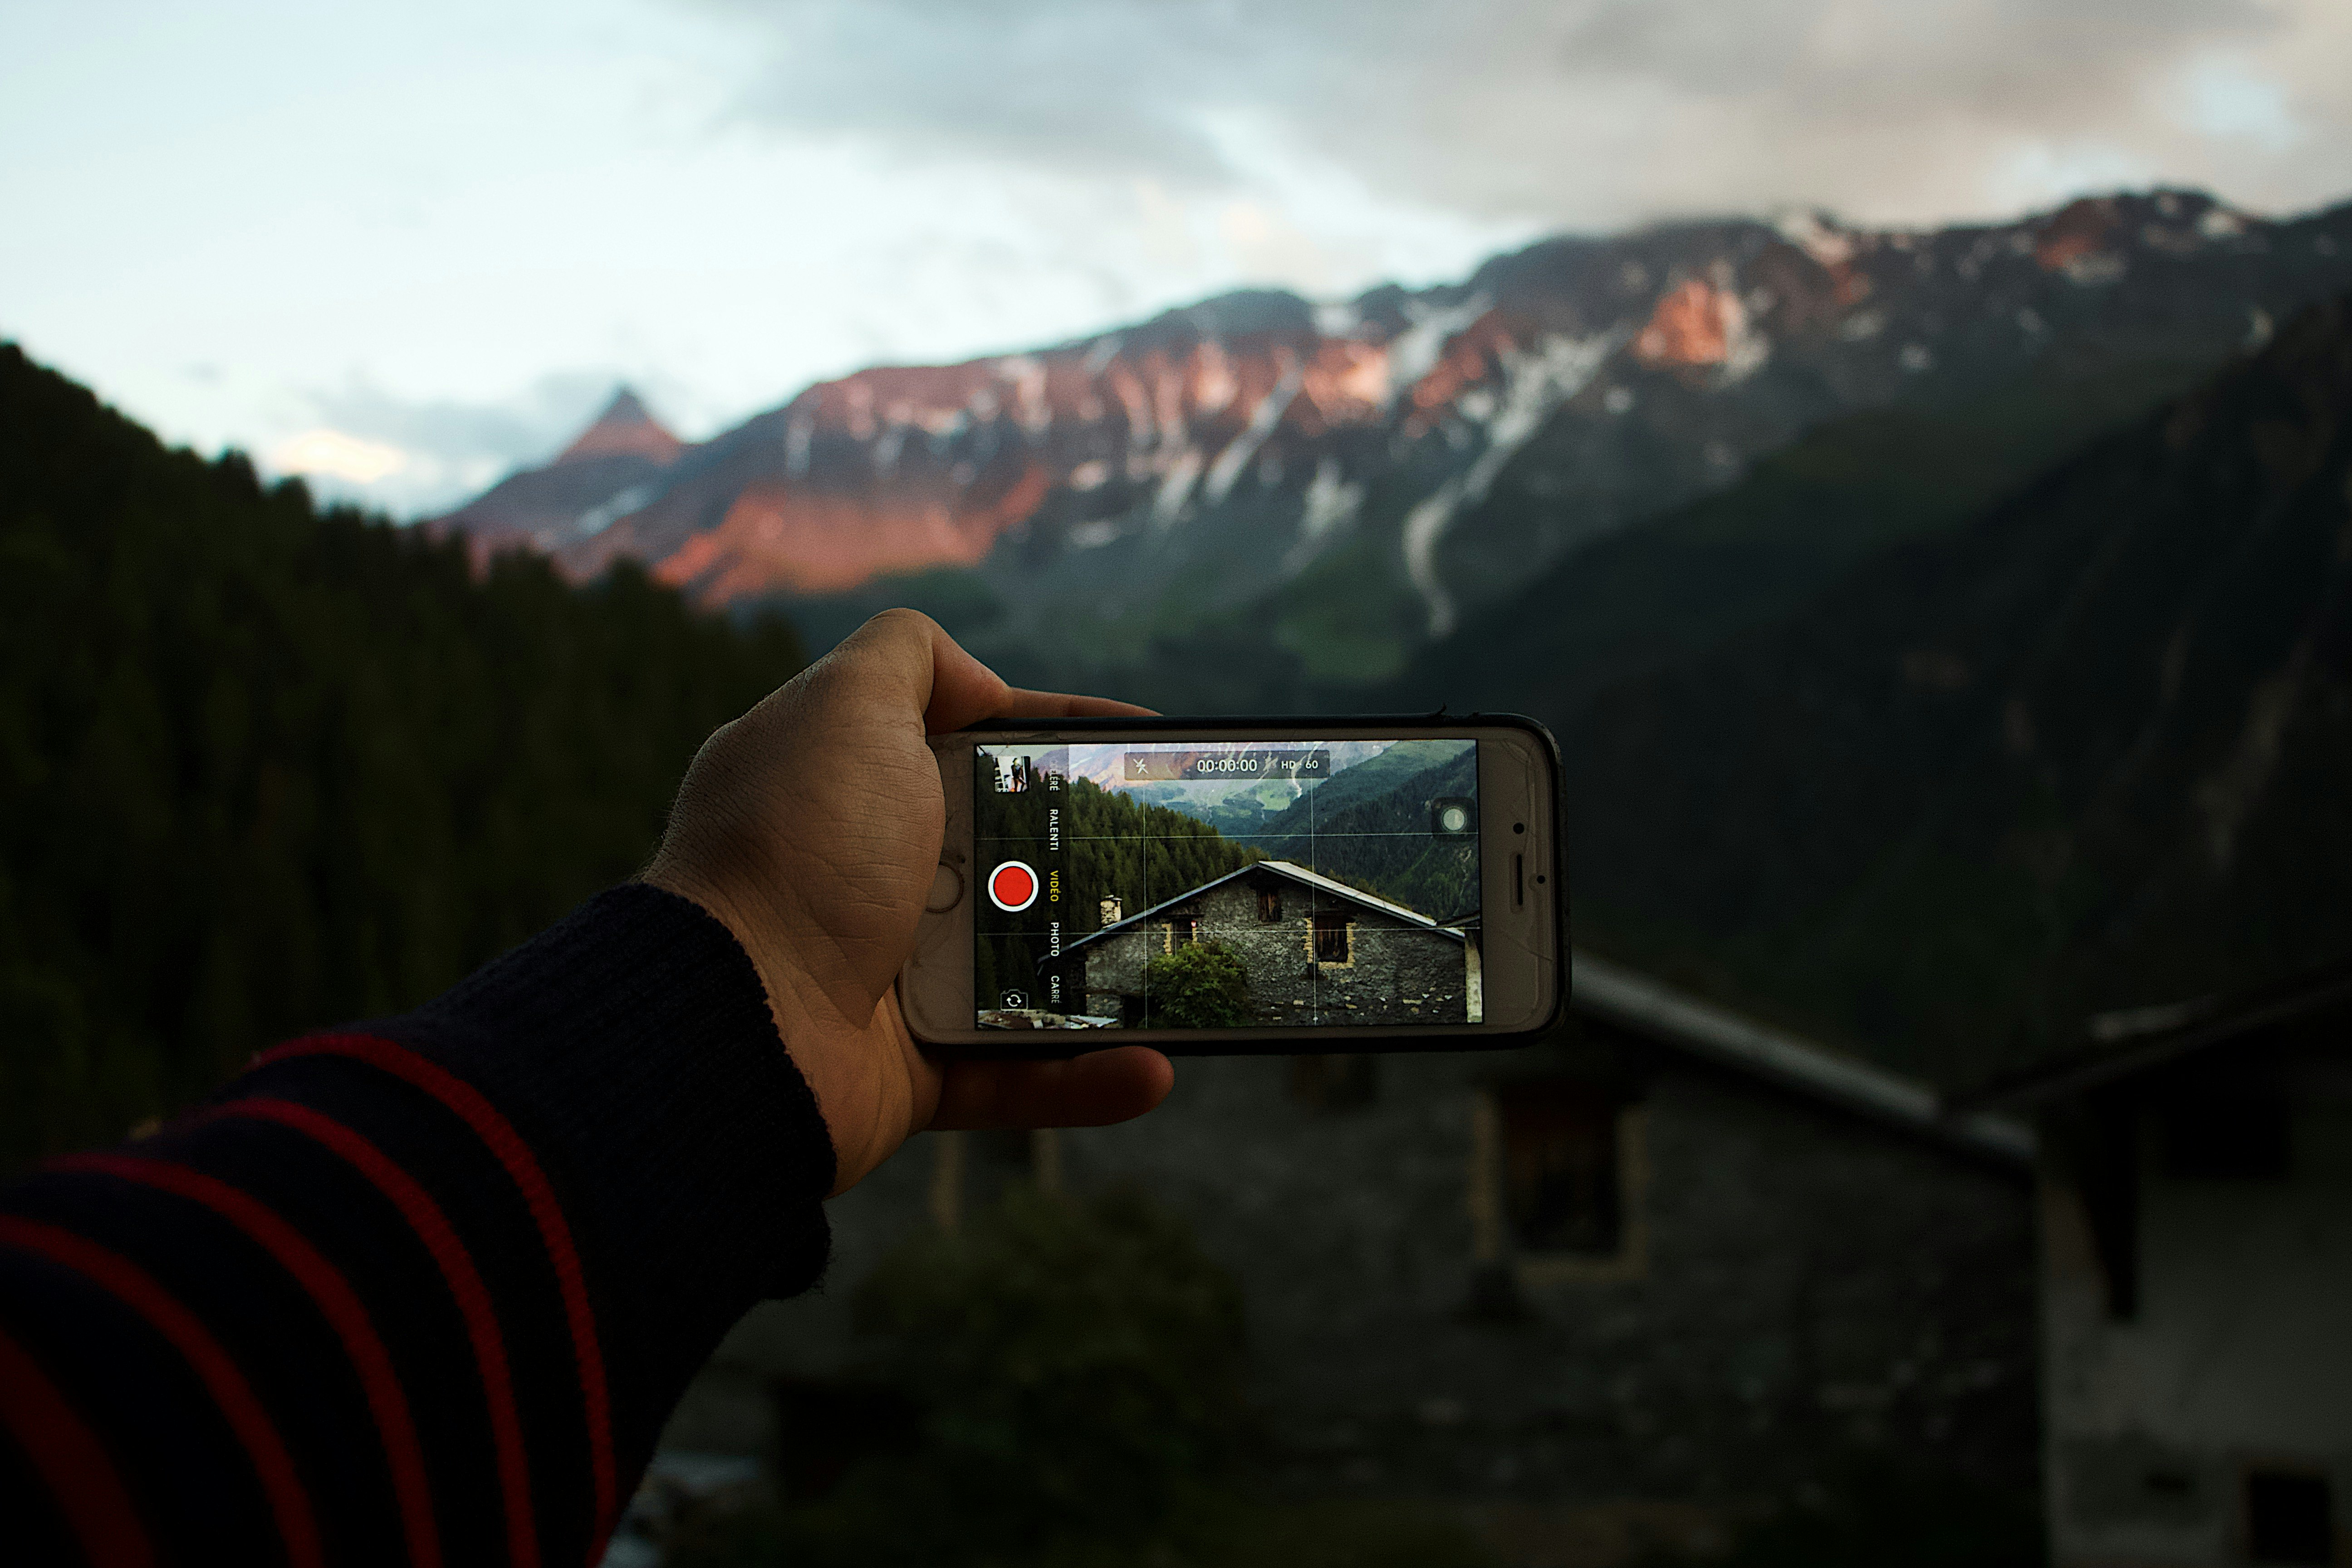 person taking digital image of mountain. Credit: Mael Balland via unsplash